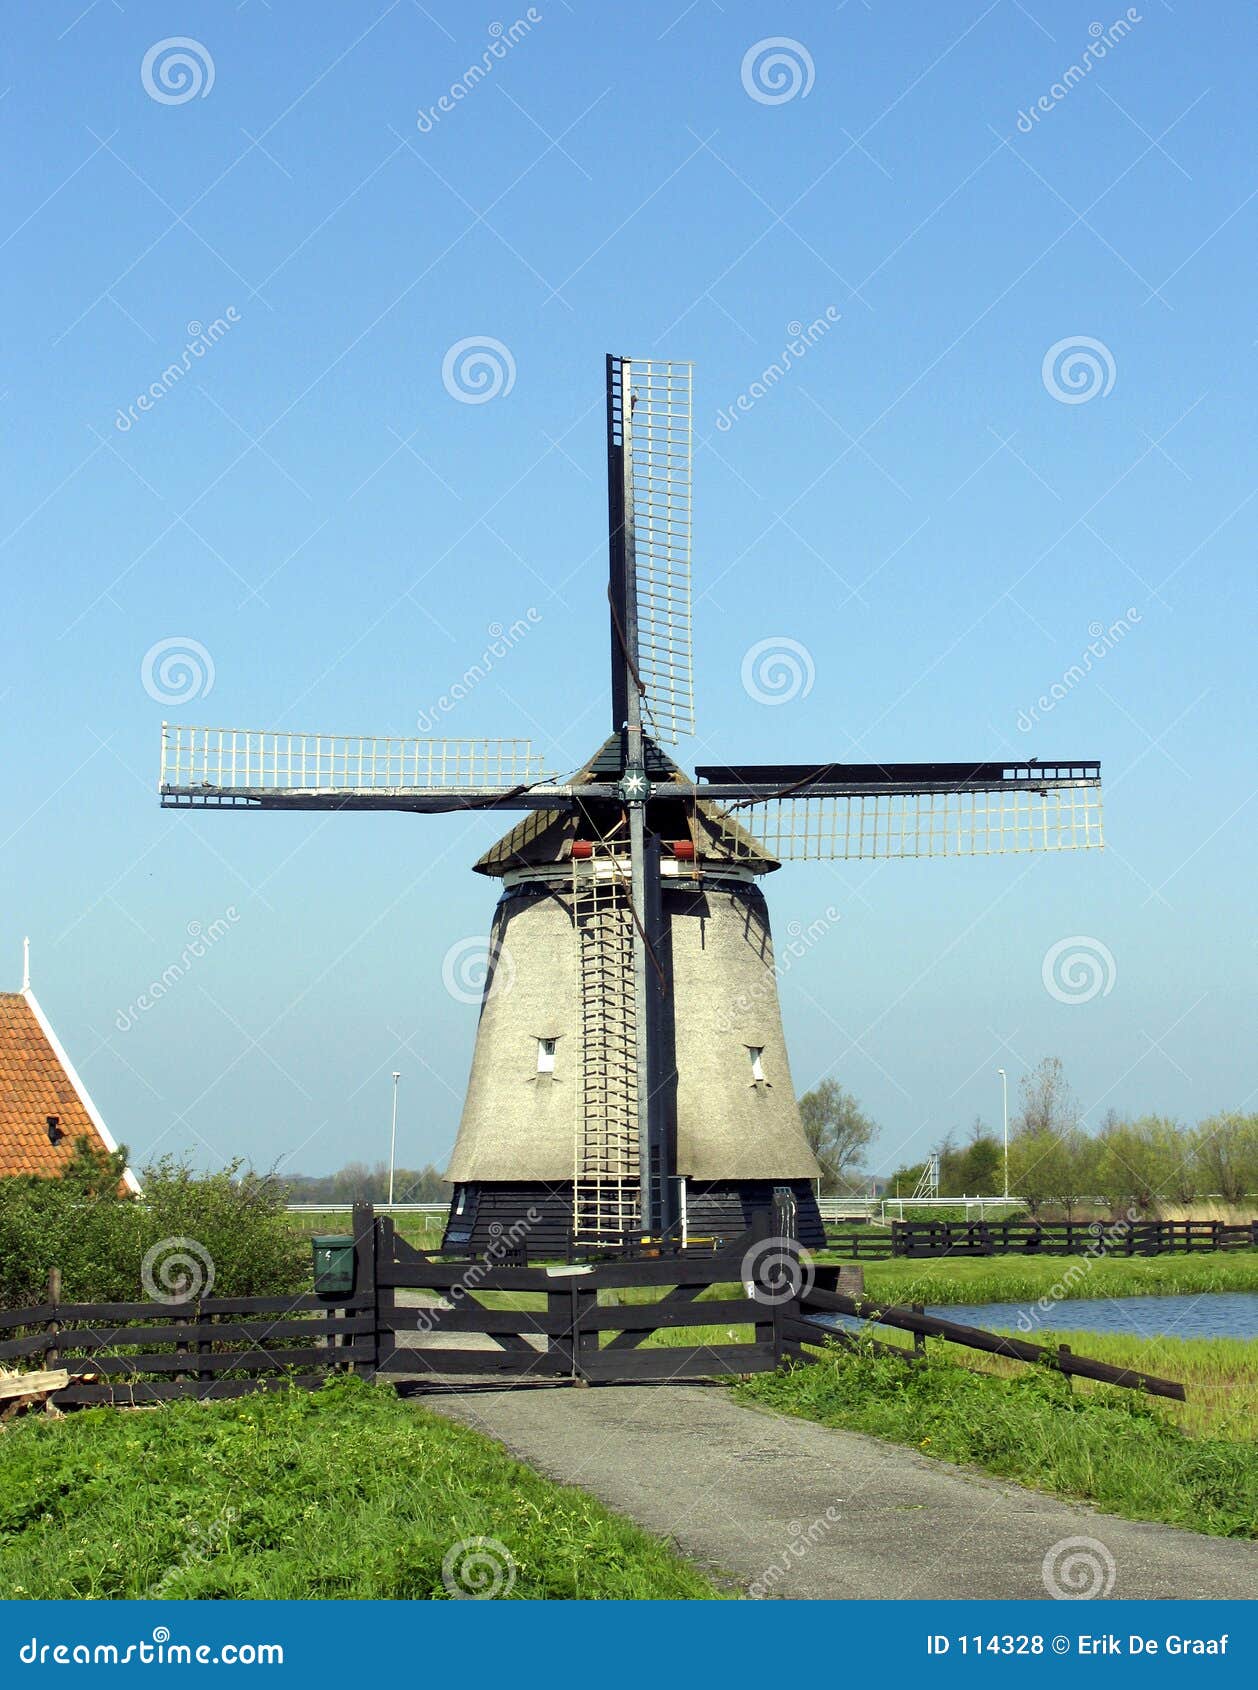 Dutch Windmill 7 Royalty Free Stock Photos - Image: 114328